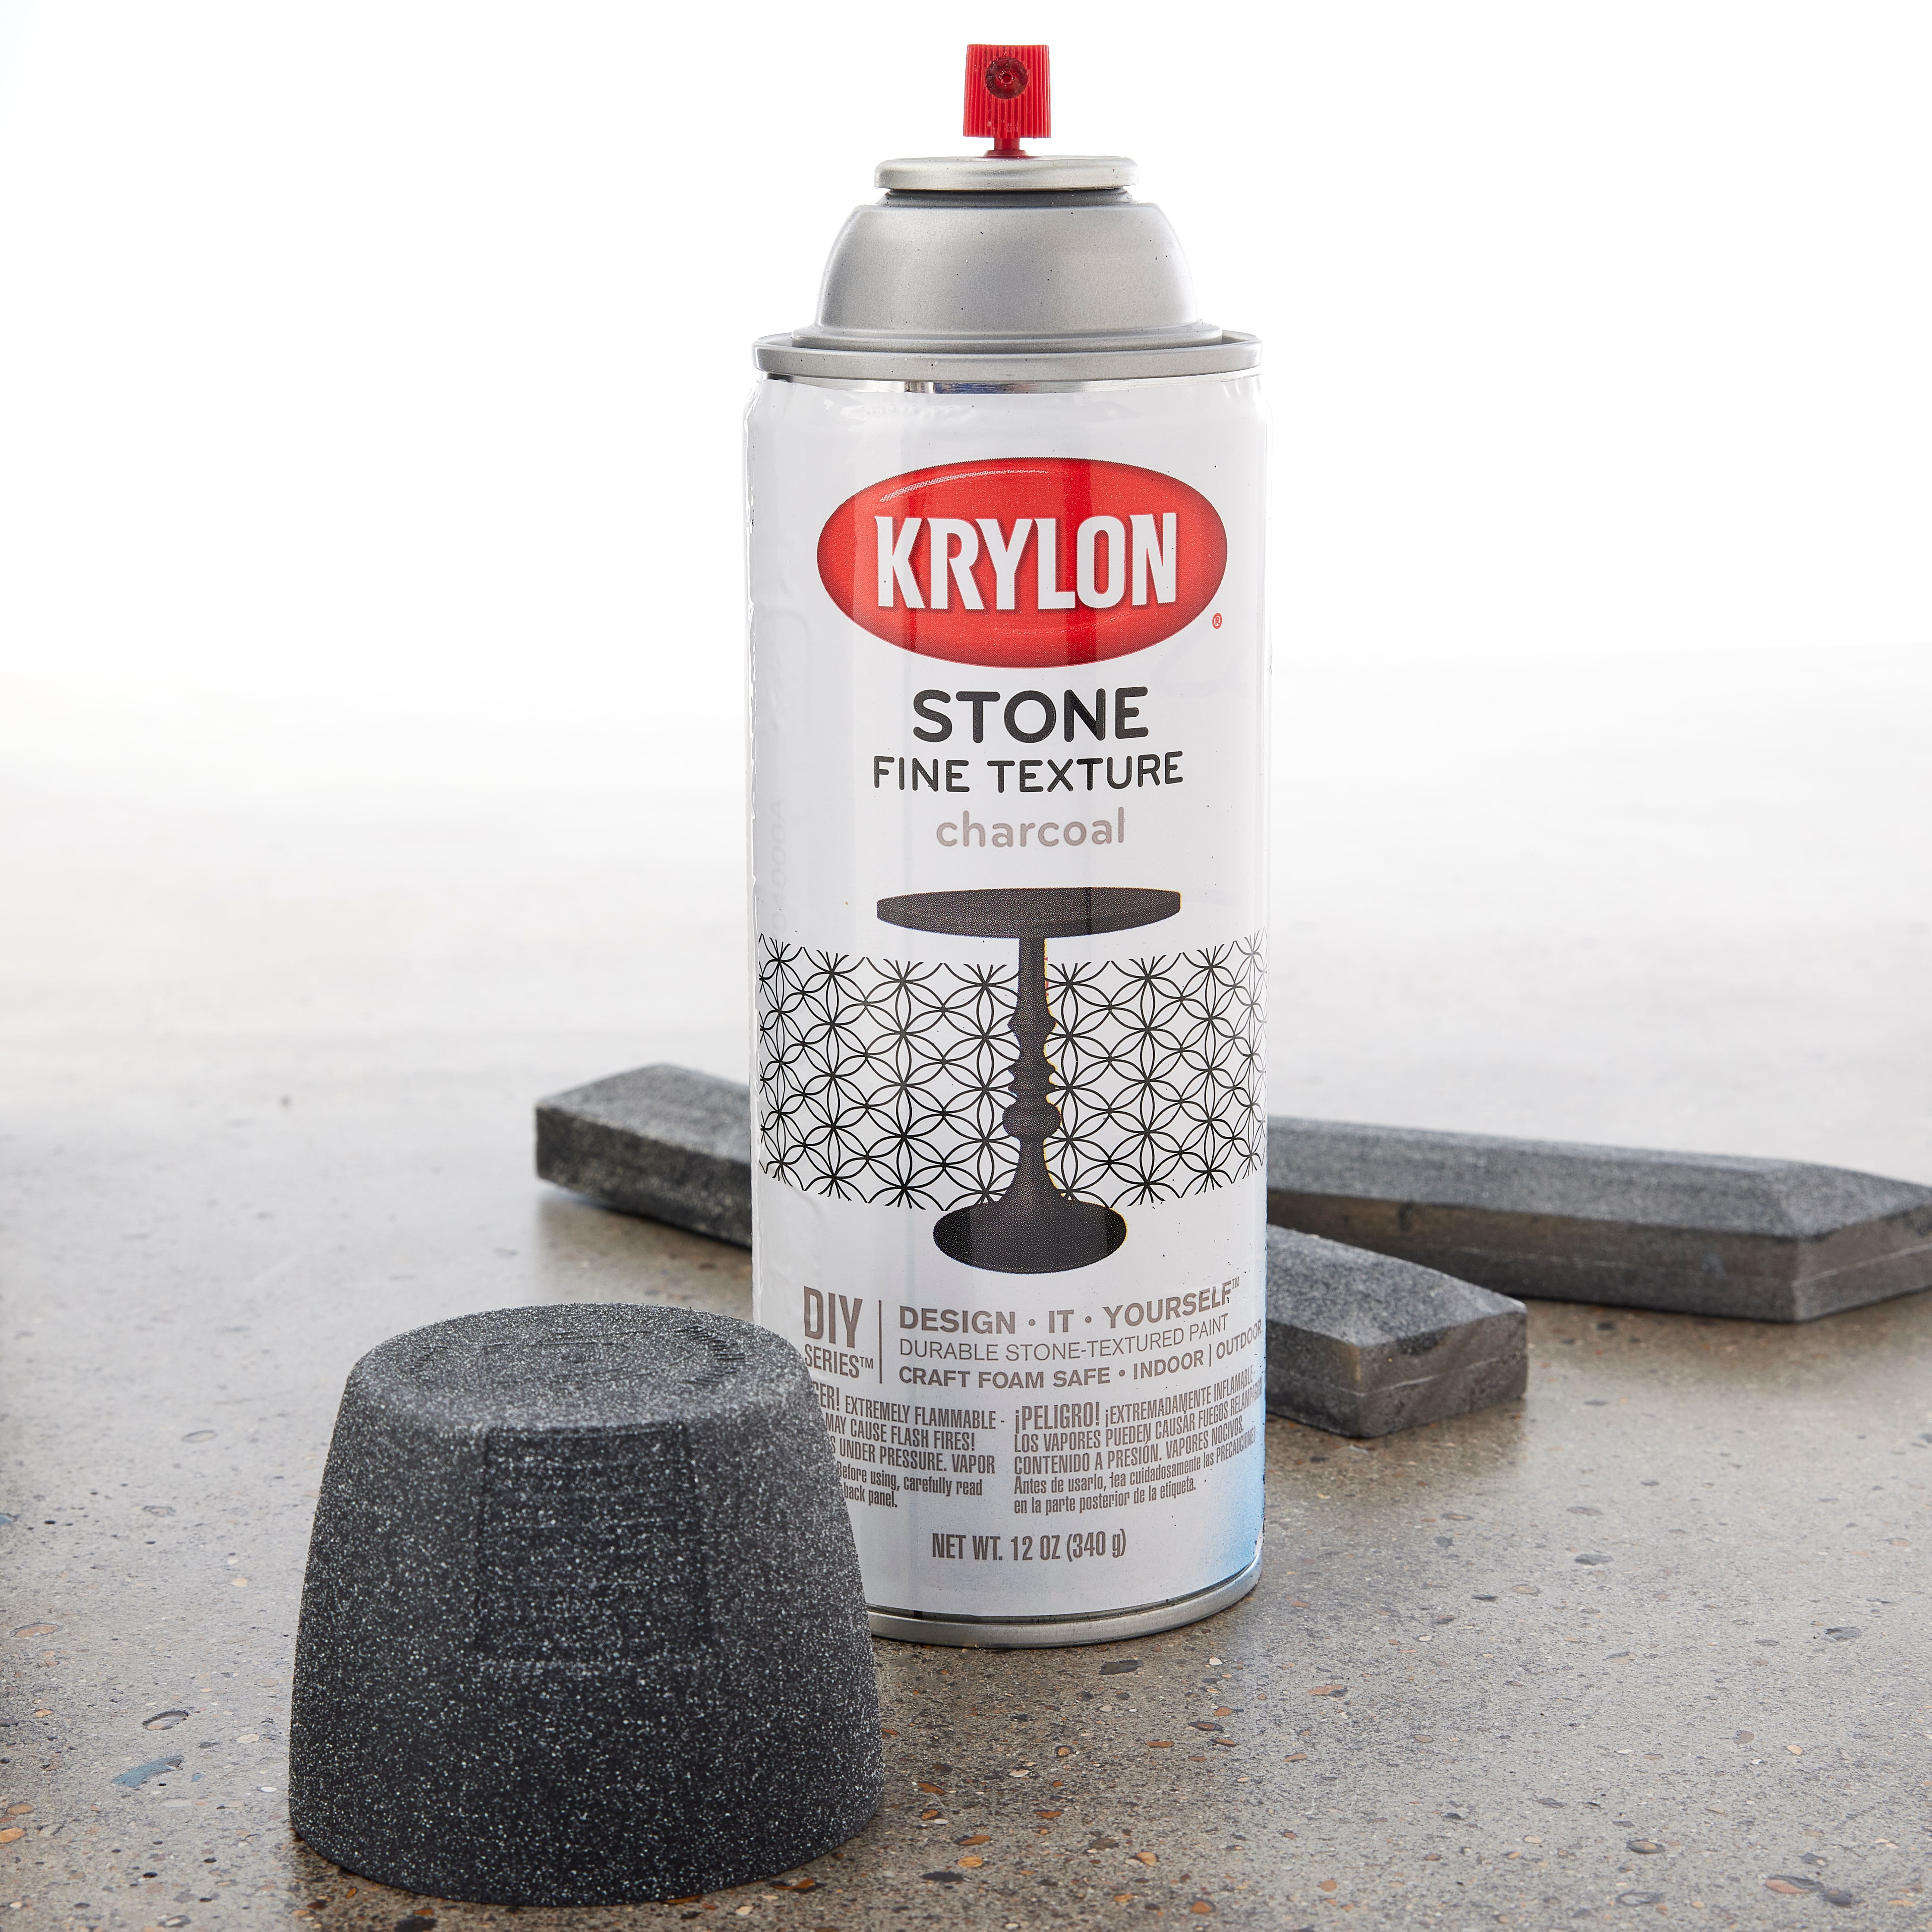 Krylon® DIY Series™ Coarse Stone Texture Paint